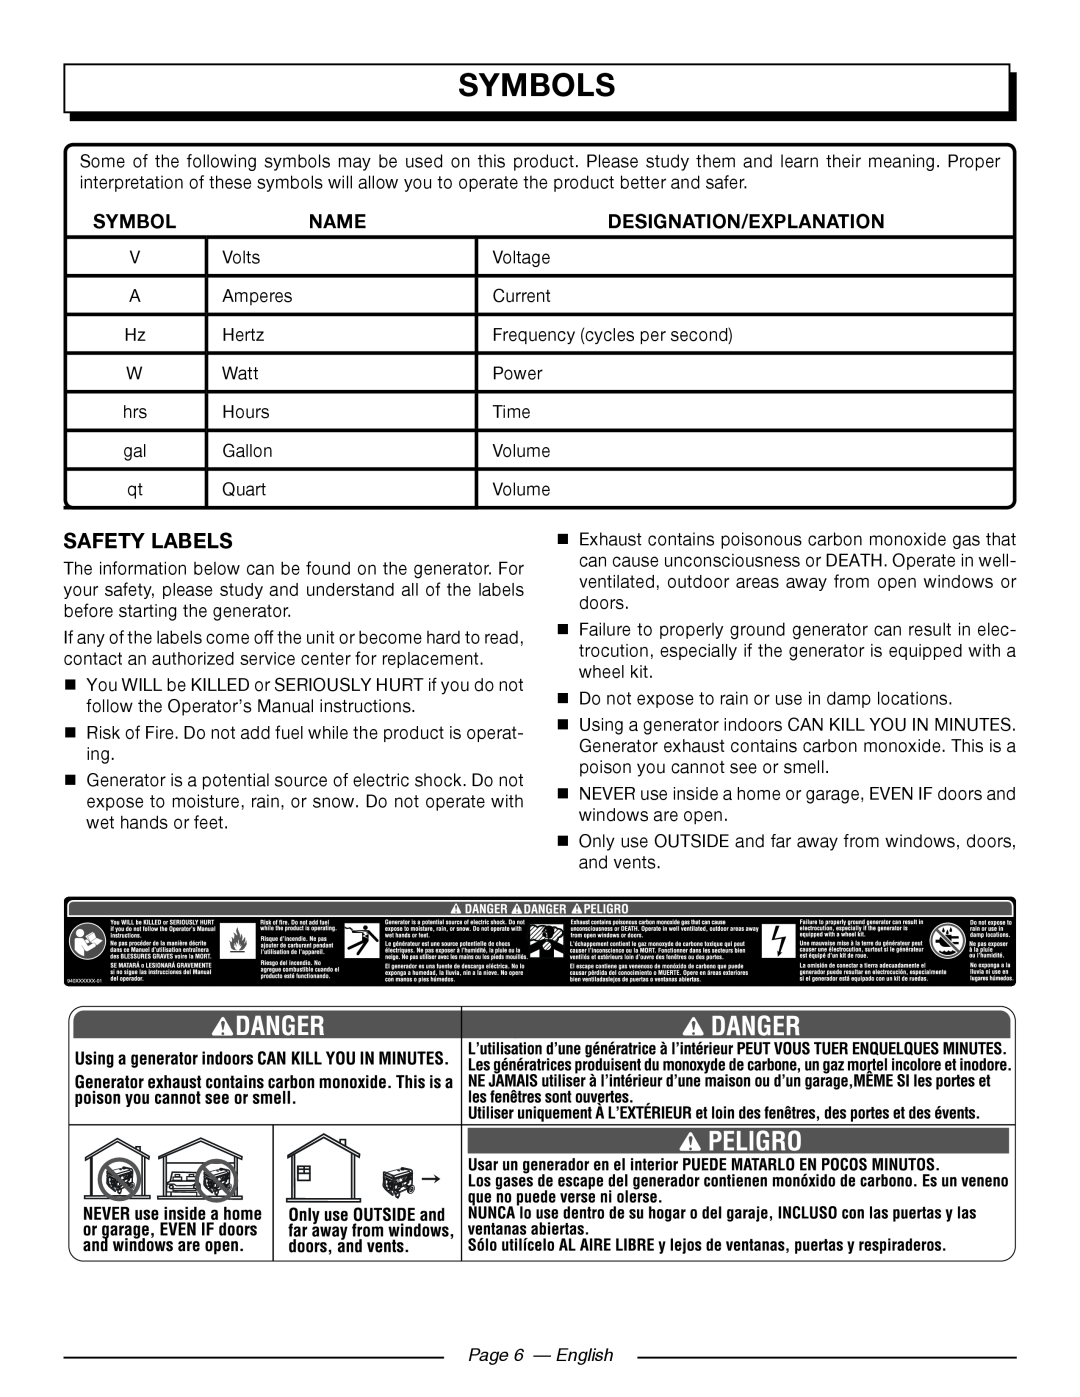 Homelite UT905011 manuel dutilisation Safety Labels, Page 6 - English, Symbols, Name, Designation/Explanation 